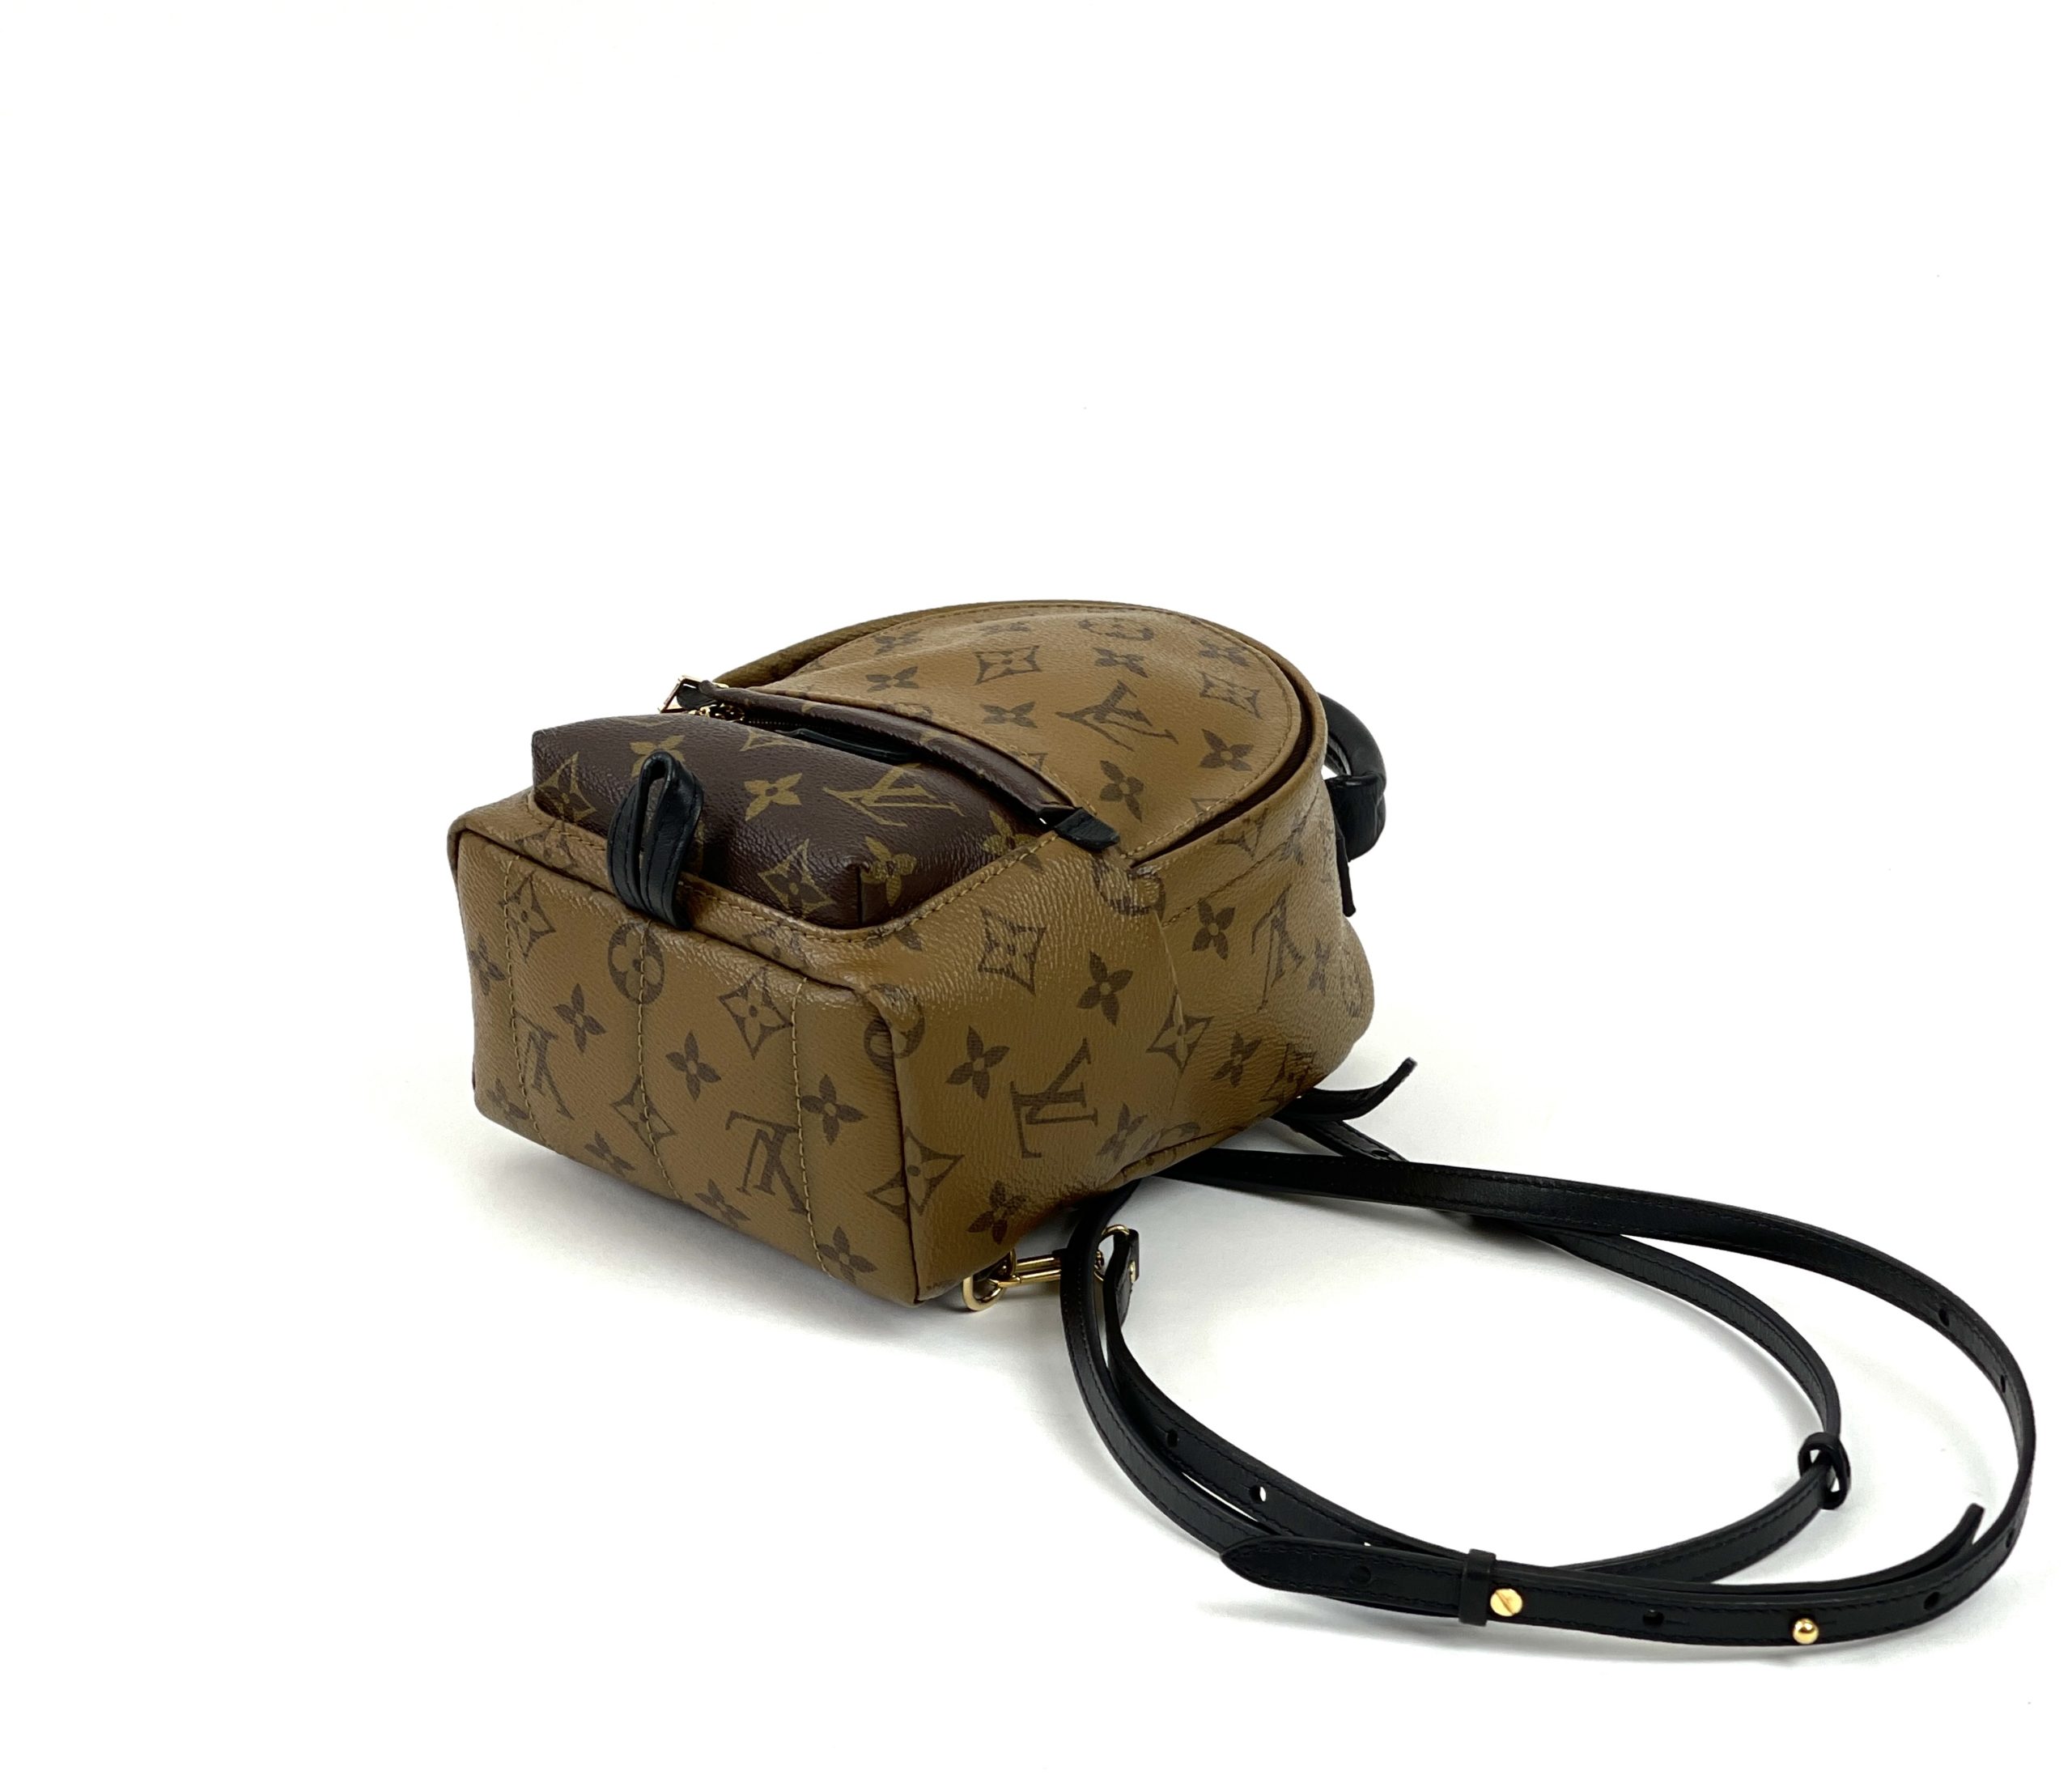 Louis Vuitton Eclipse Mini Backpack Charm